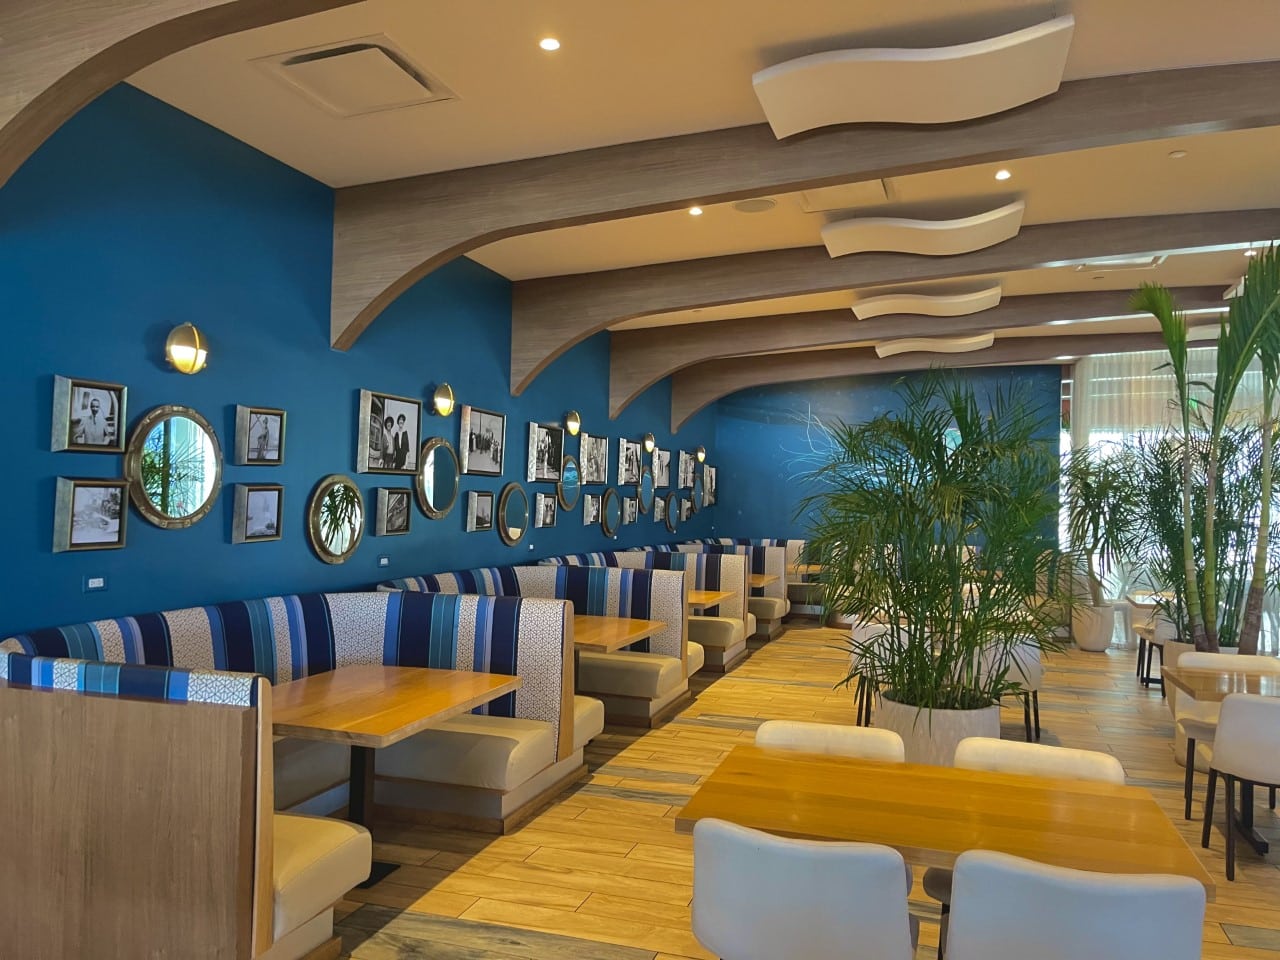 Oceanic, A Beautiful Restaurant in Pompano Beach